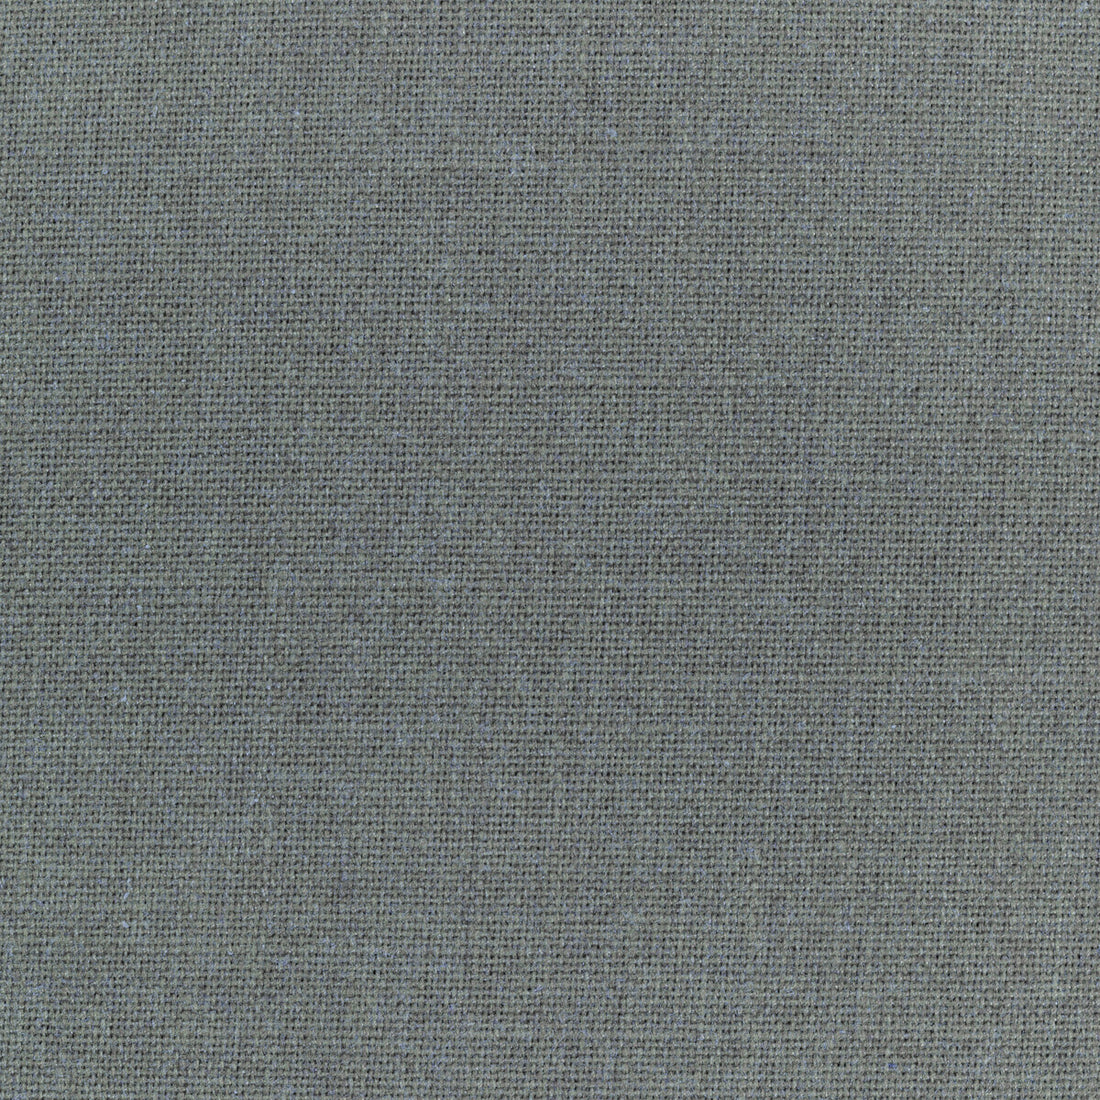 Kravet Smart fabric in 36112-52 color - pattern 36112.52.0 - by Kravet Smart in the Performance Kravetarmor collection